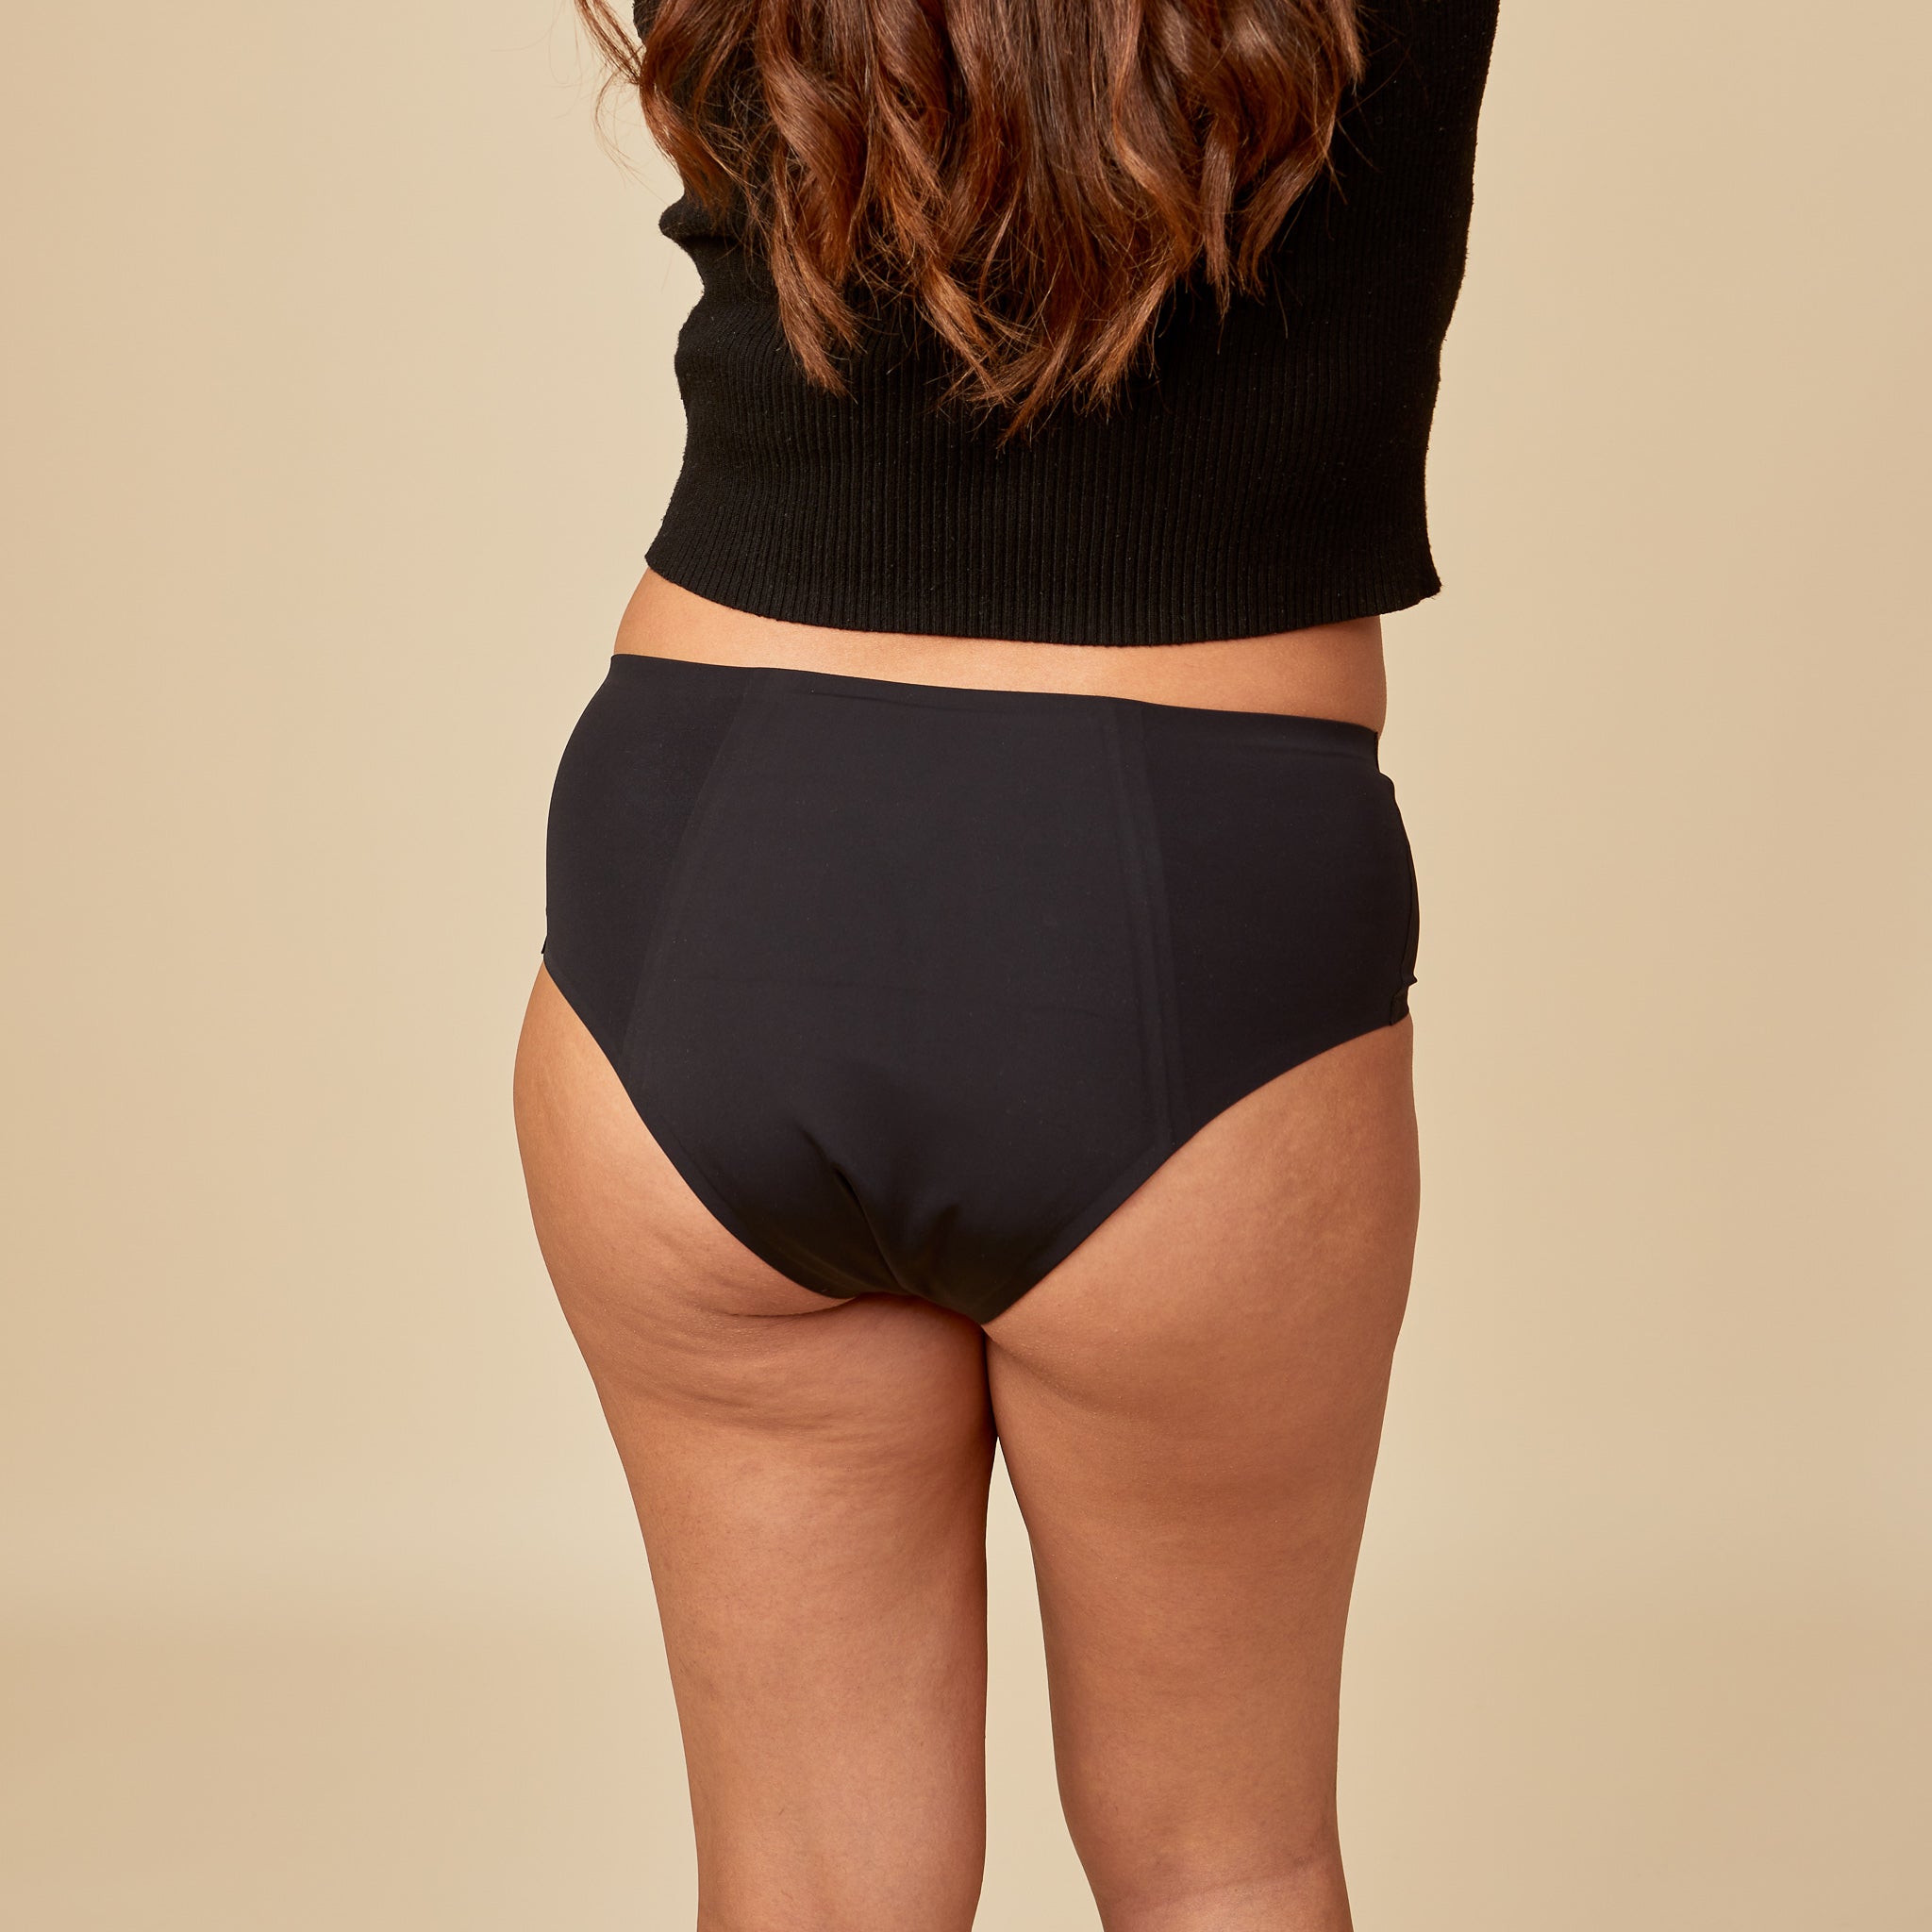 dais bladder leak underwear in black shown on model from the back. 